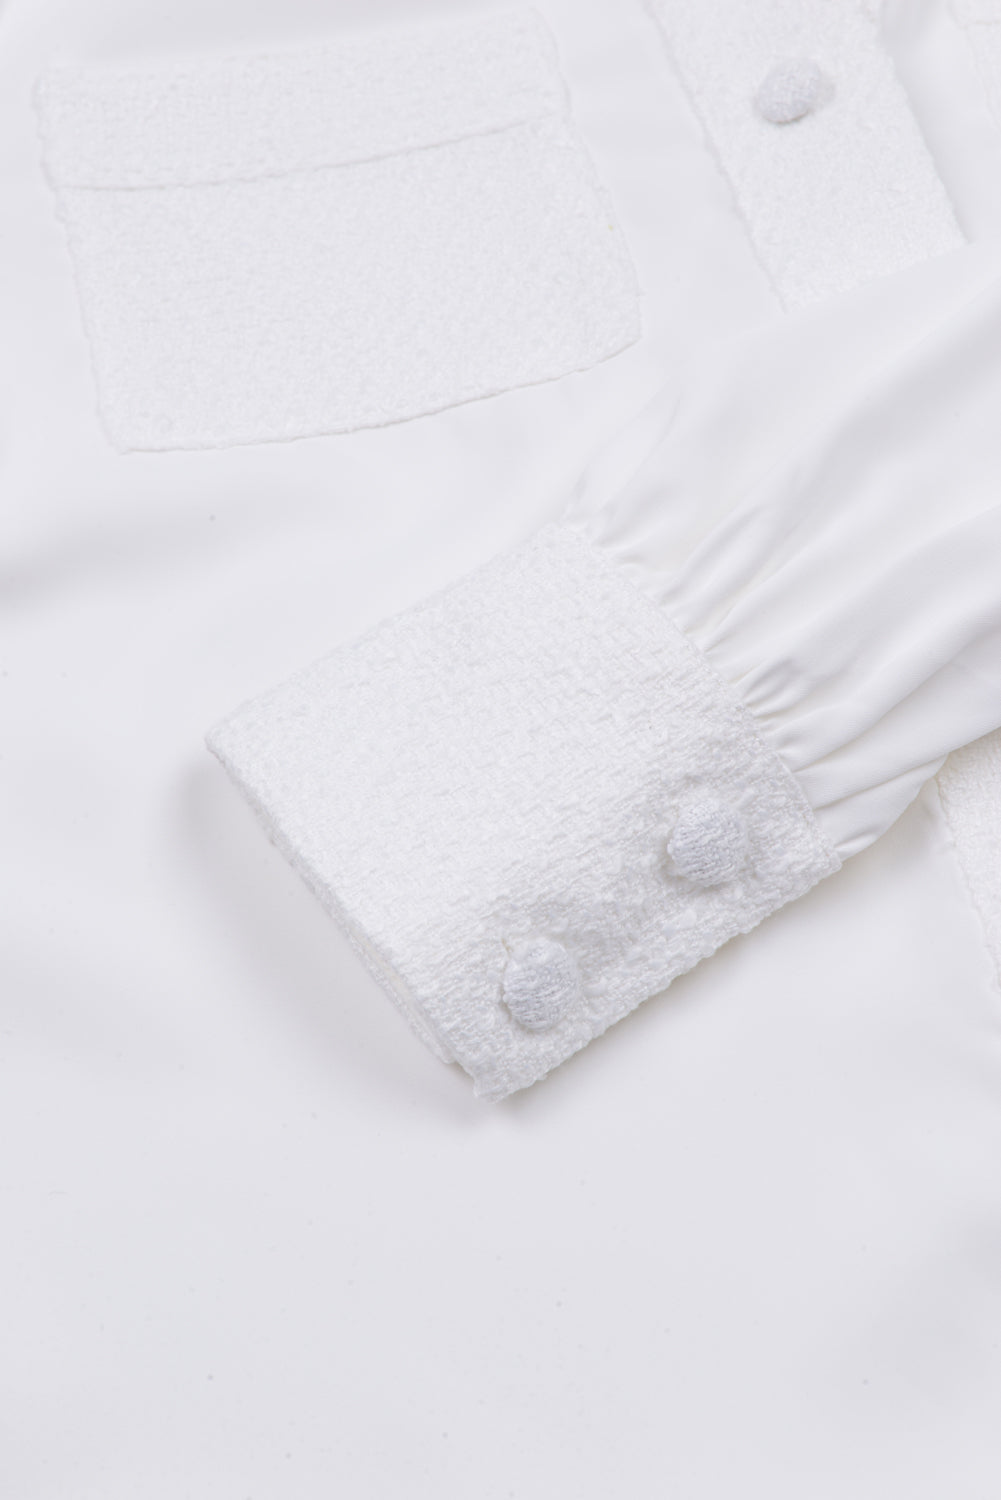 Pussy Bow Tweed Chiffon Shirt (White)